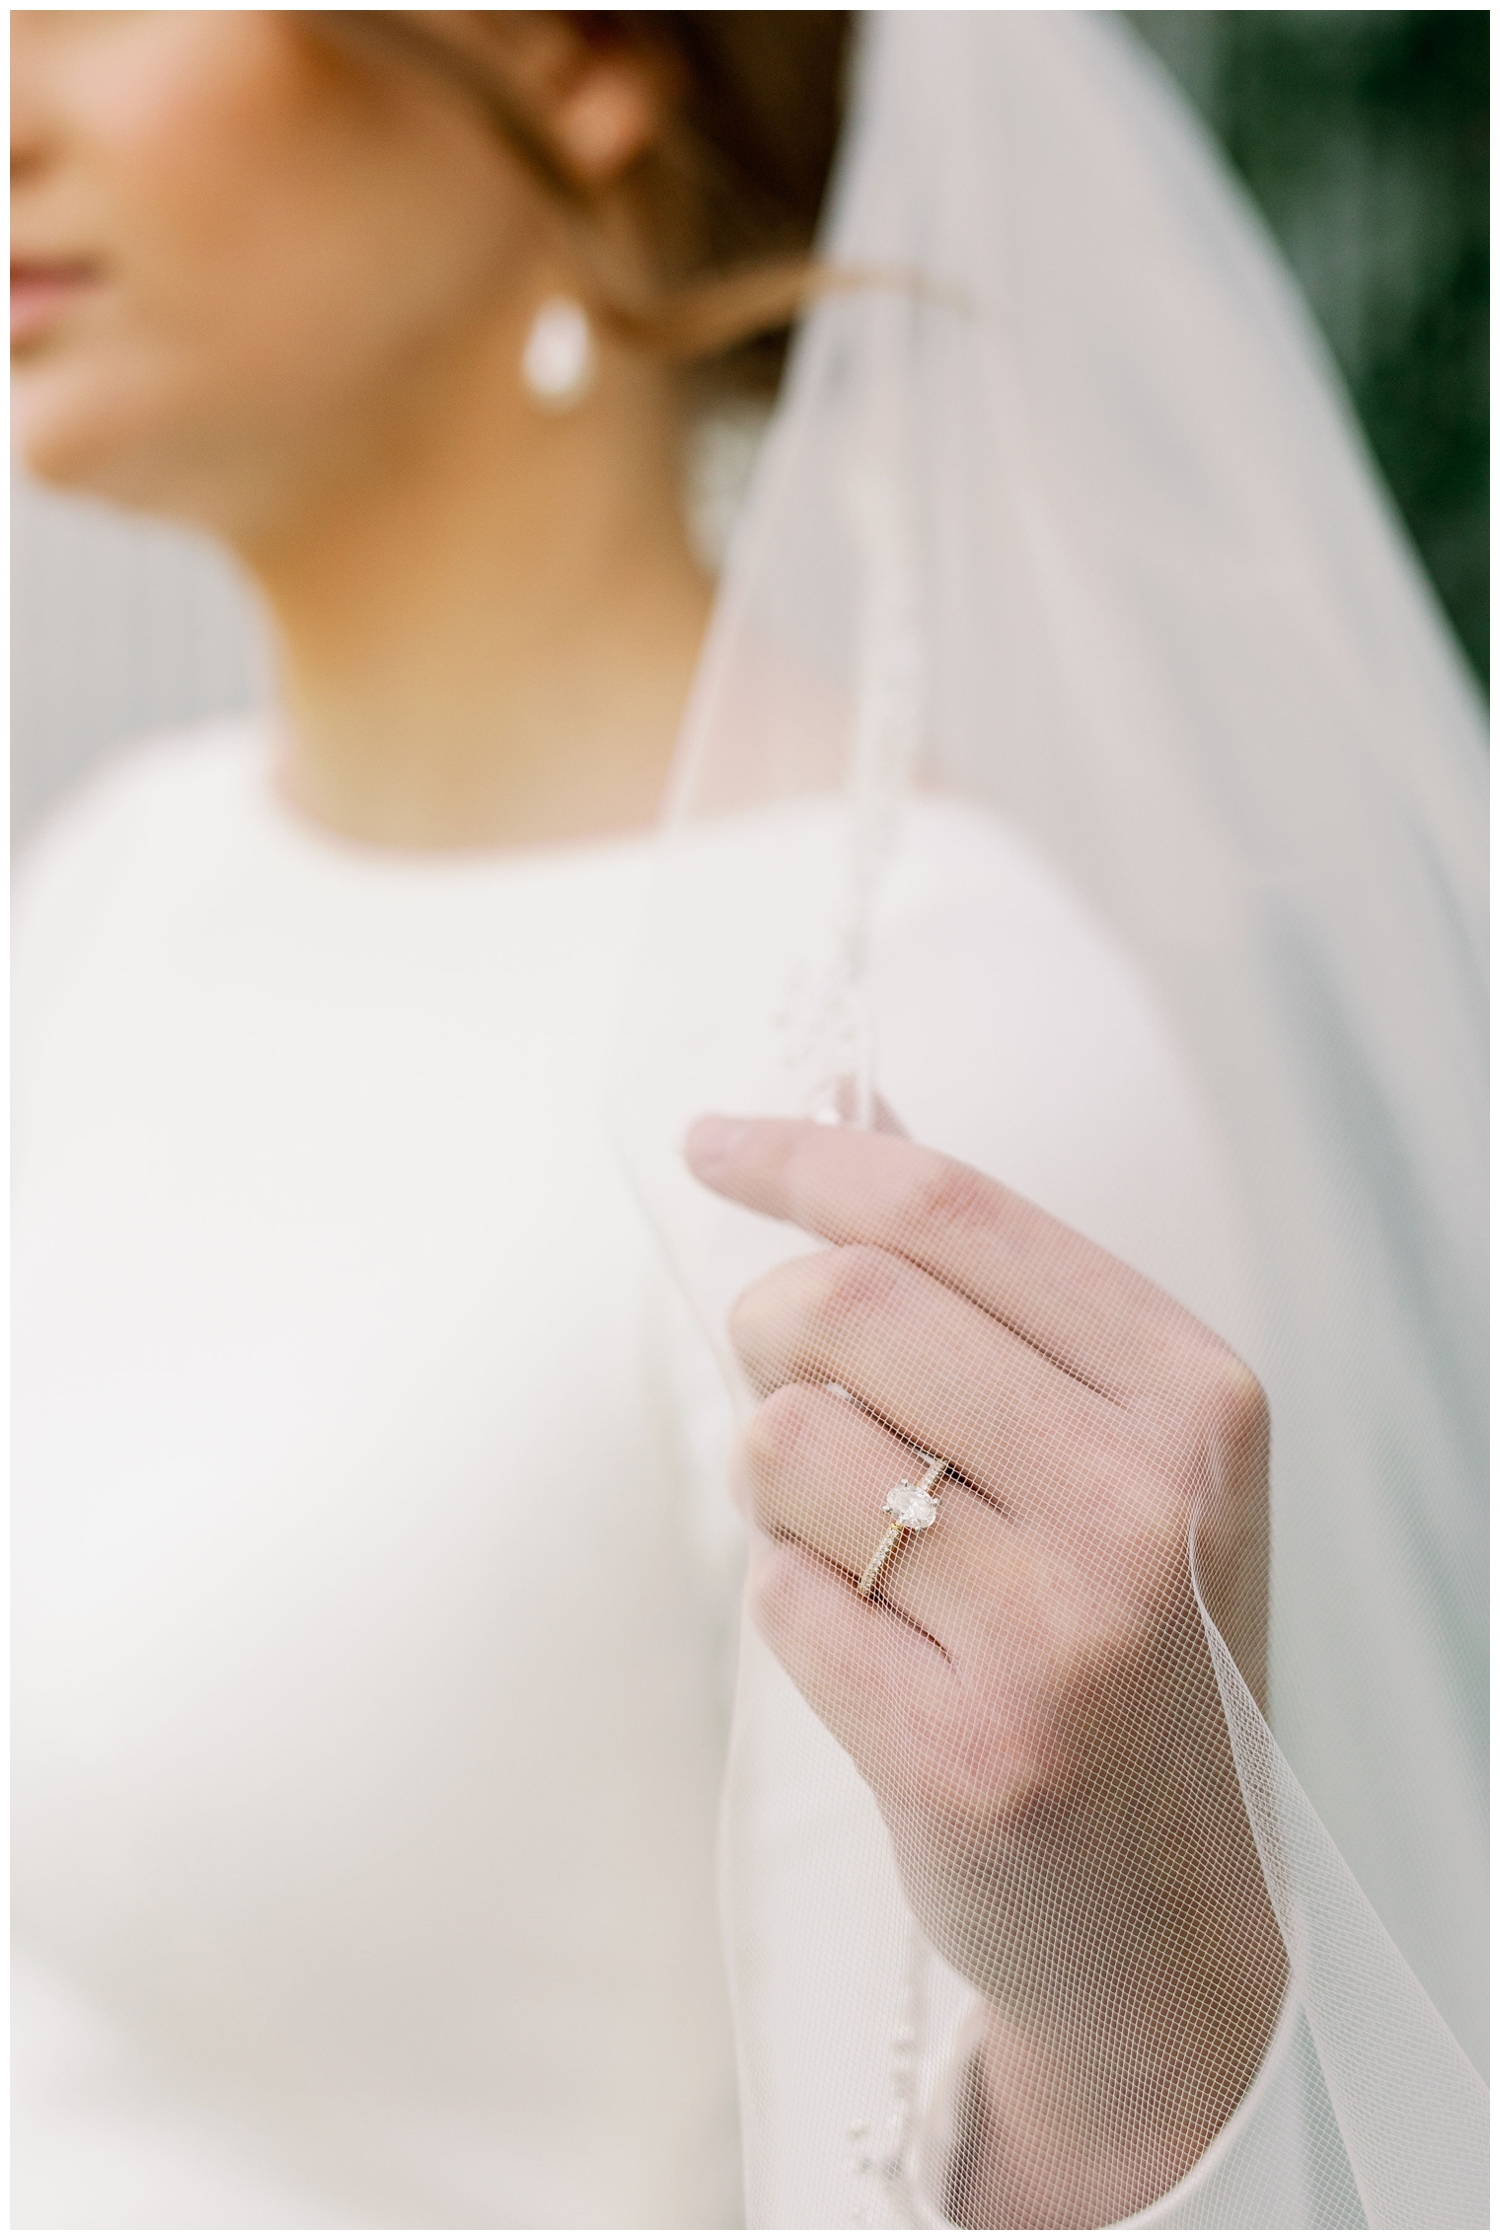 detail shot of bride's hand holding veil